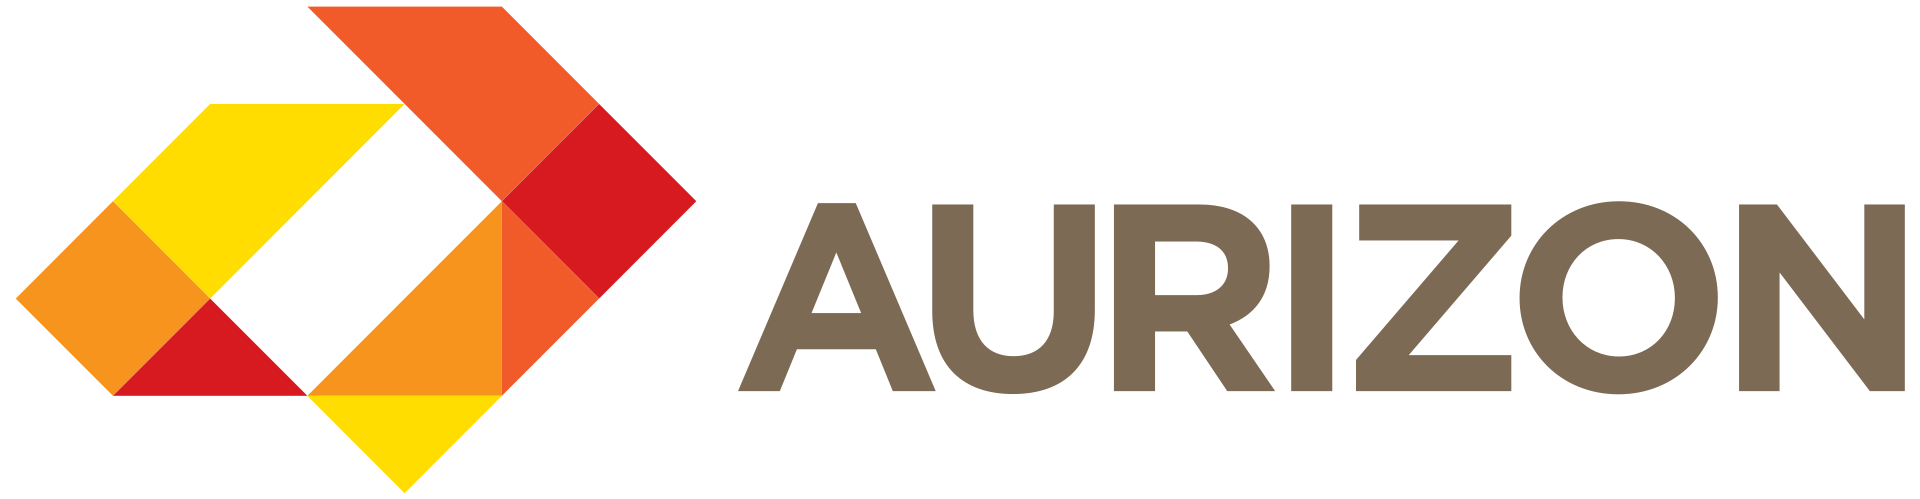 Aurizon Brand Logo